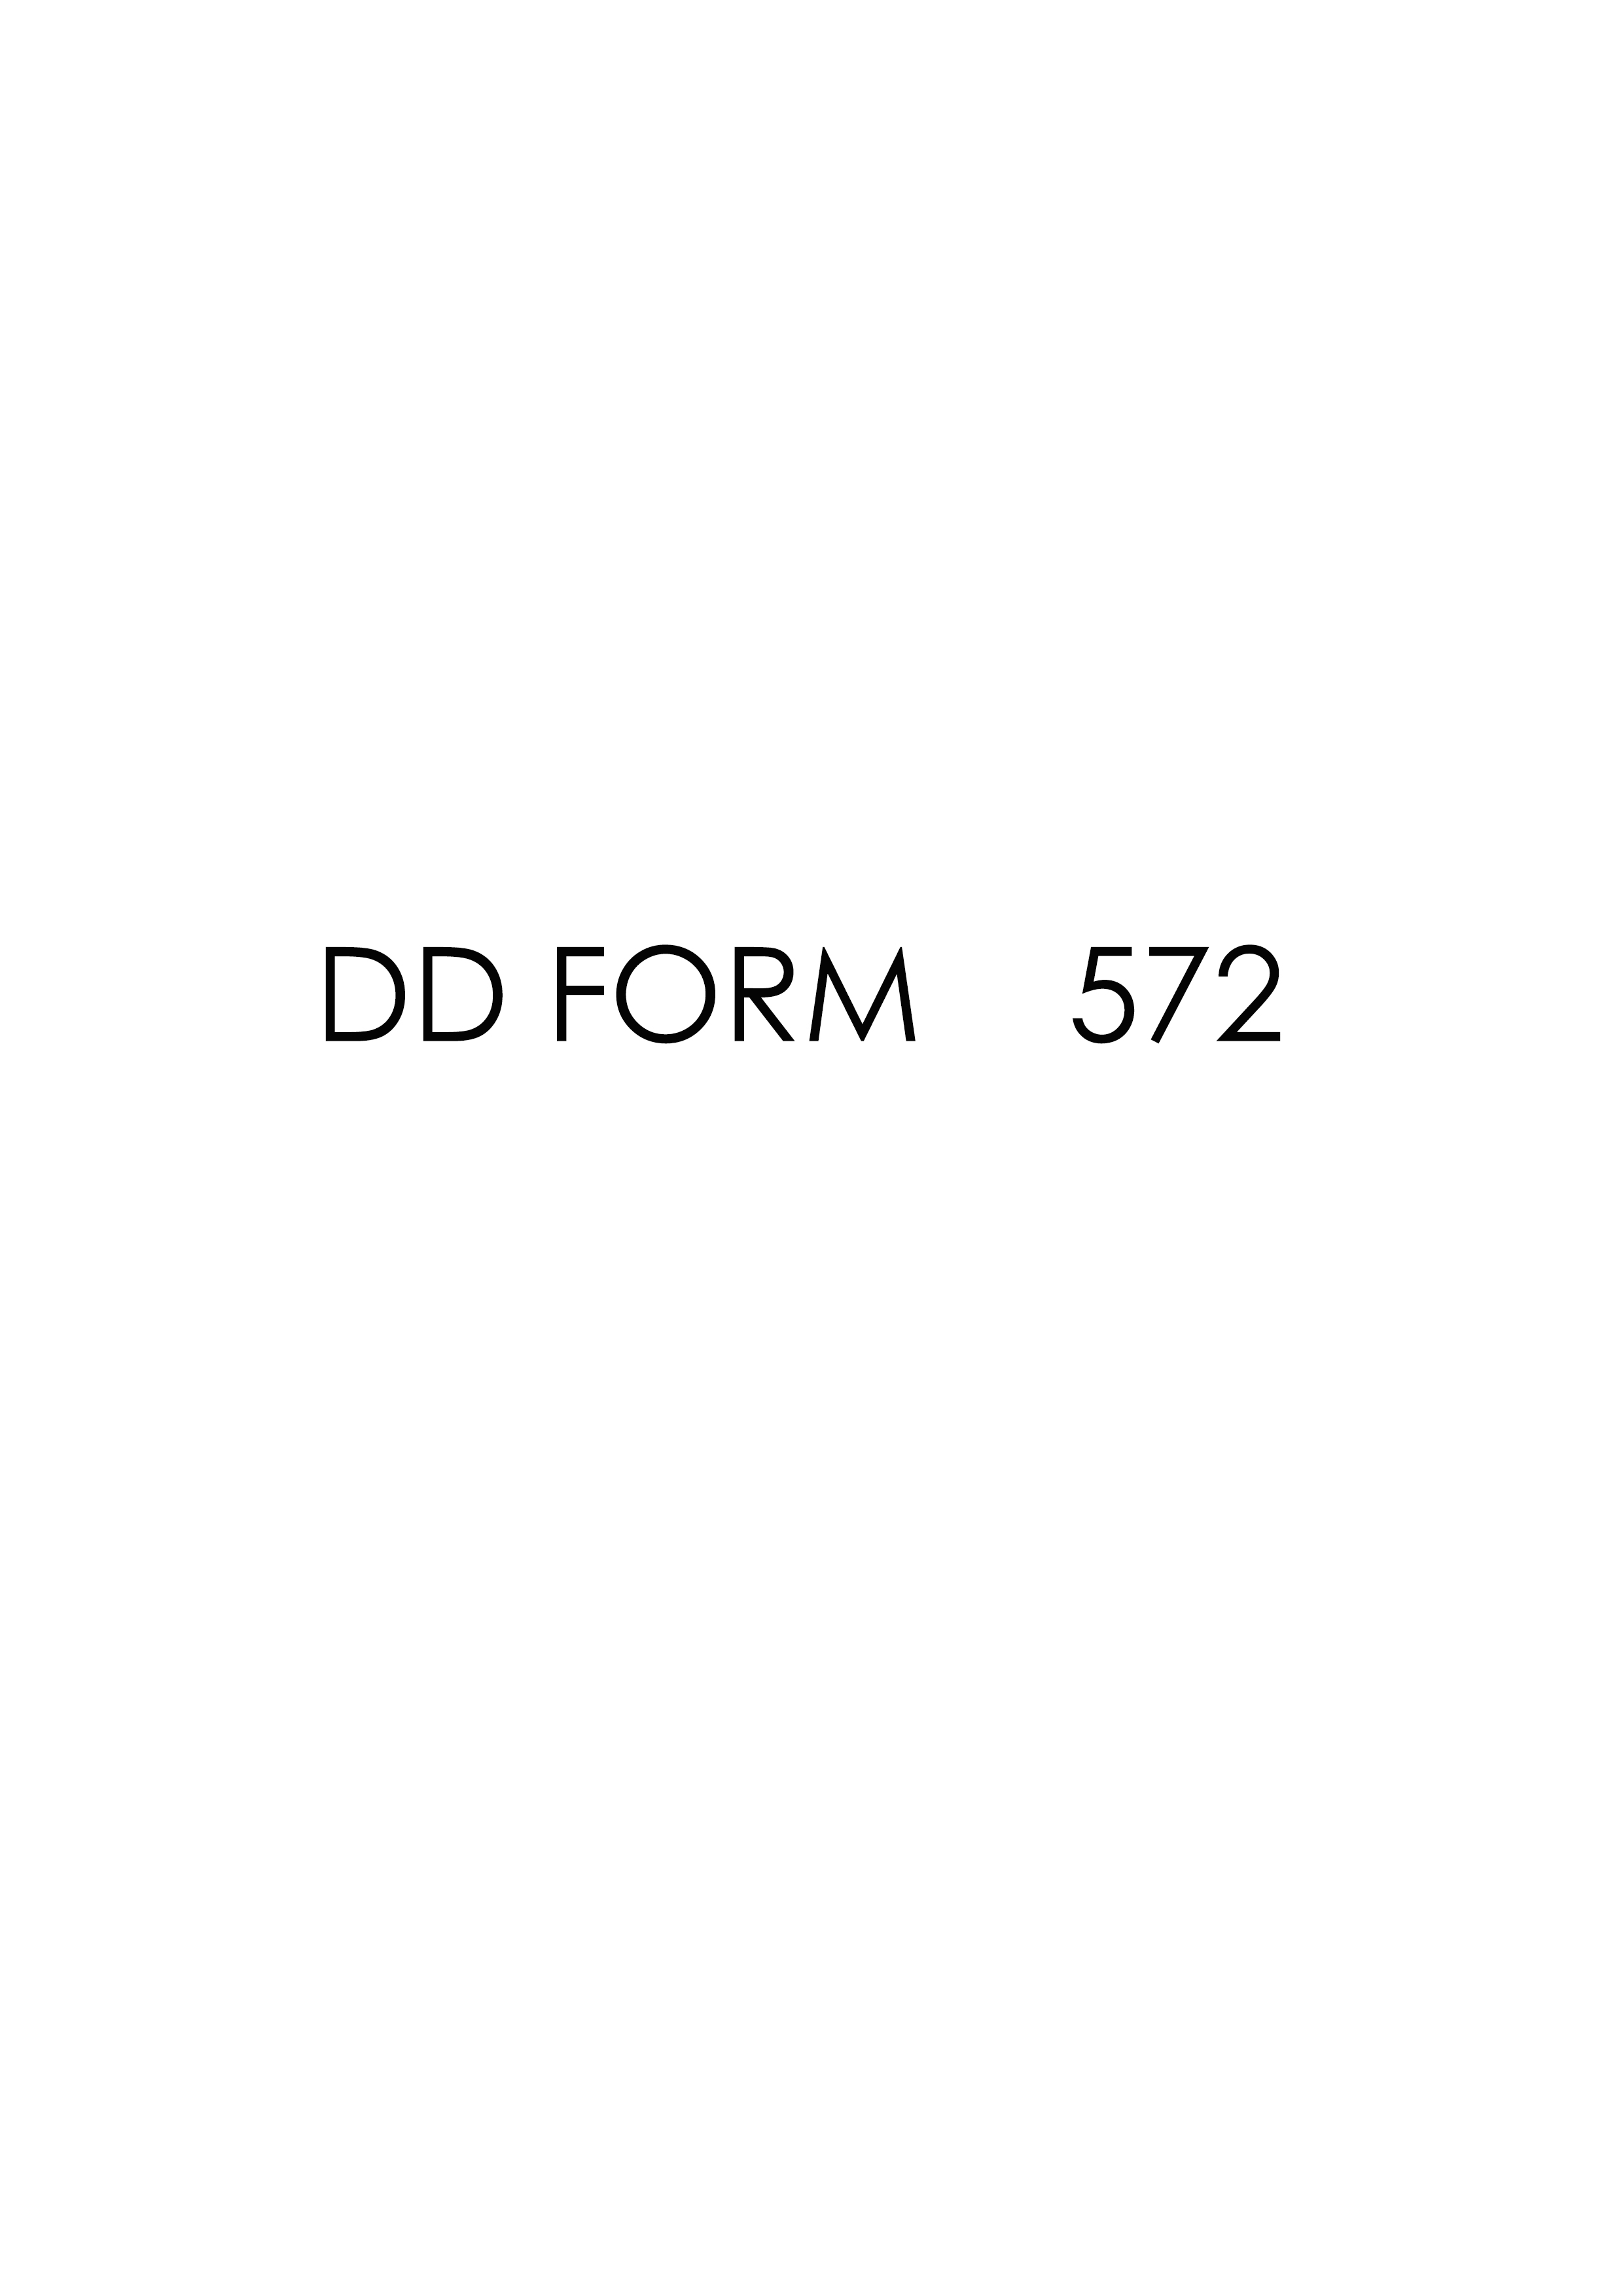 Download dd 572 Form